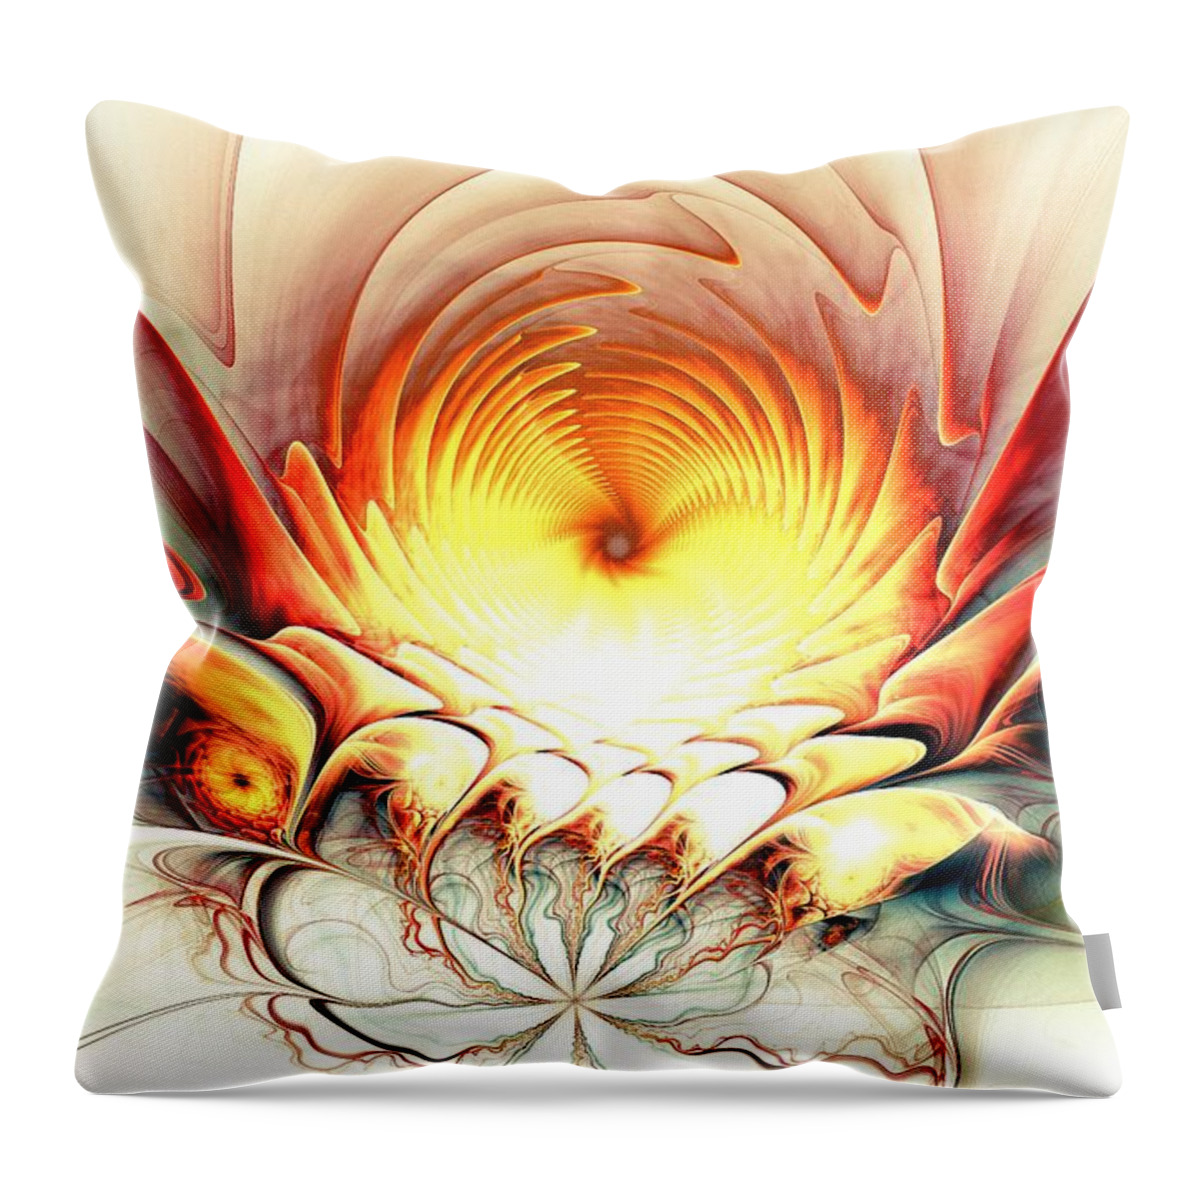 Malakhova Throw Pillow featuring the digital art Sunrise in Neverland by Anastasiya Malakhova